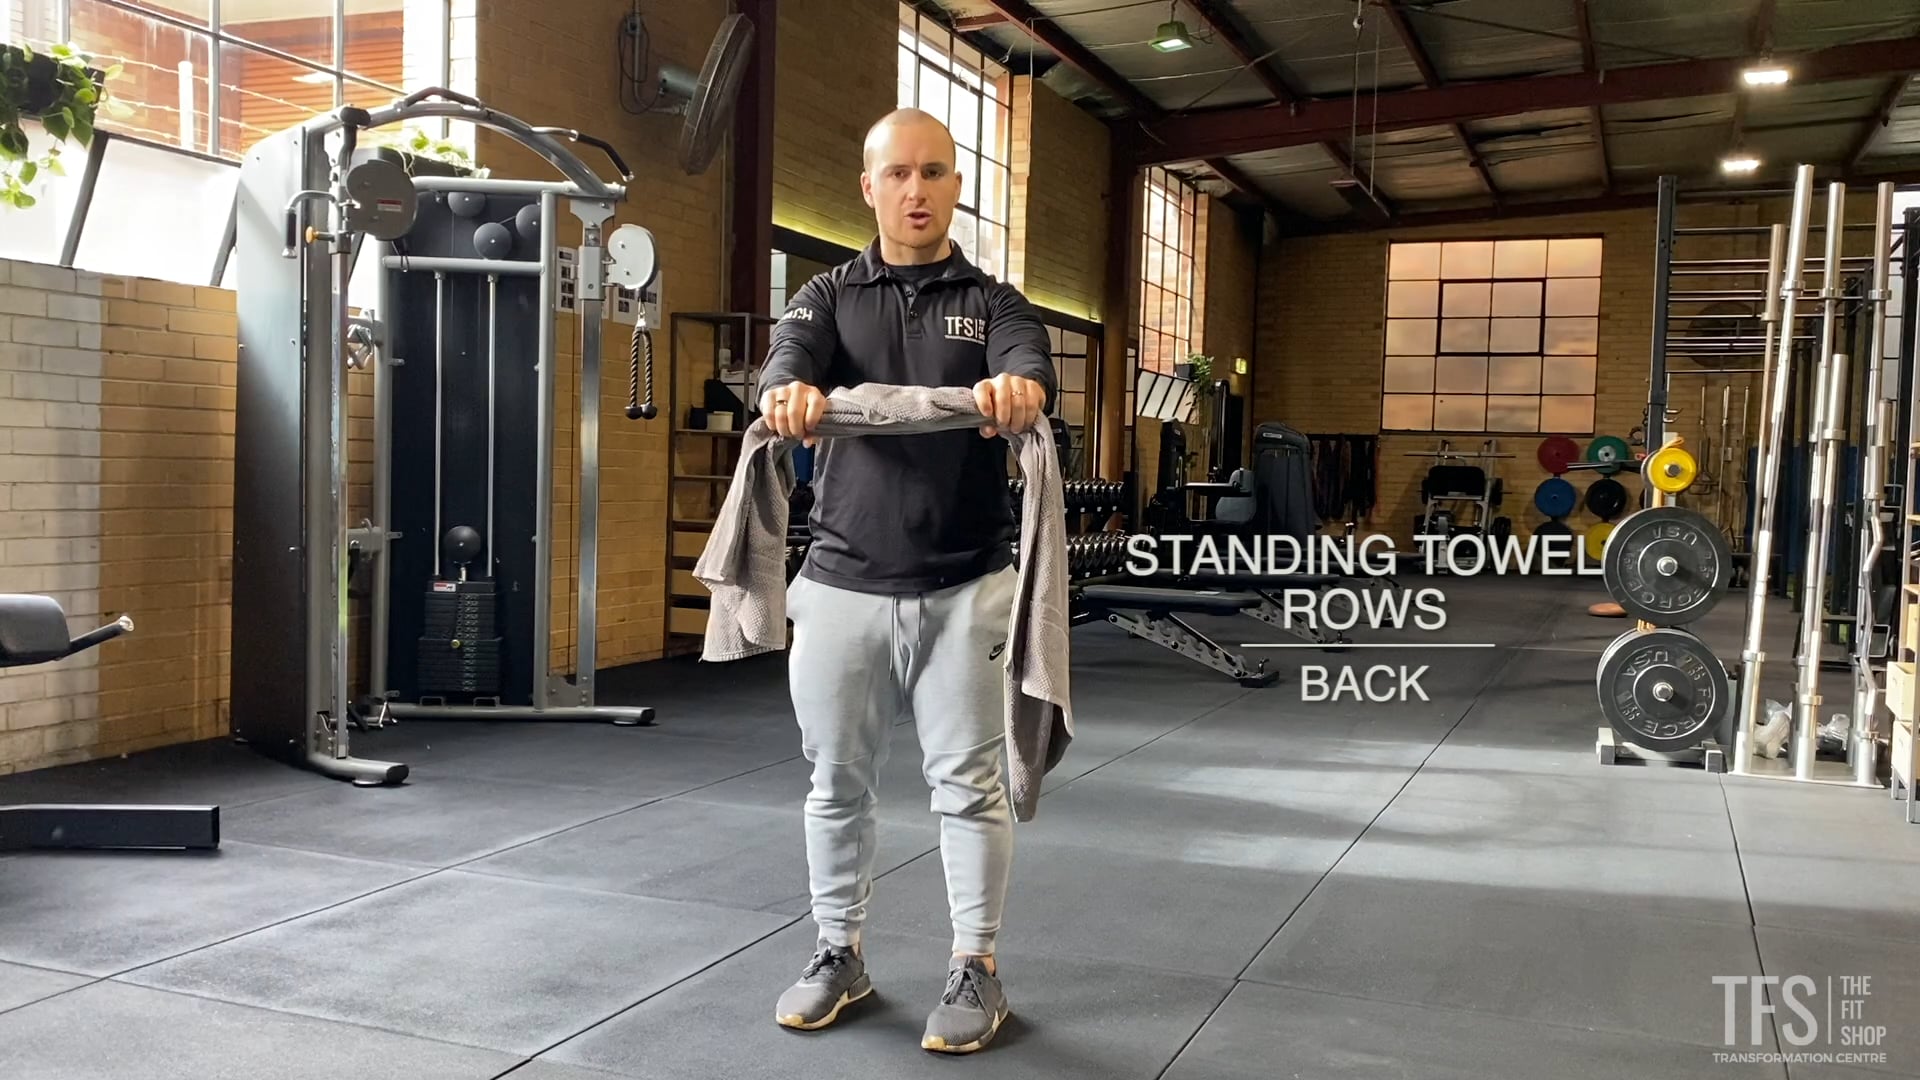 Standing Towel Rows on Vimeo